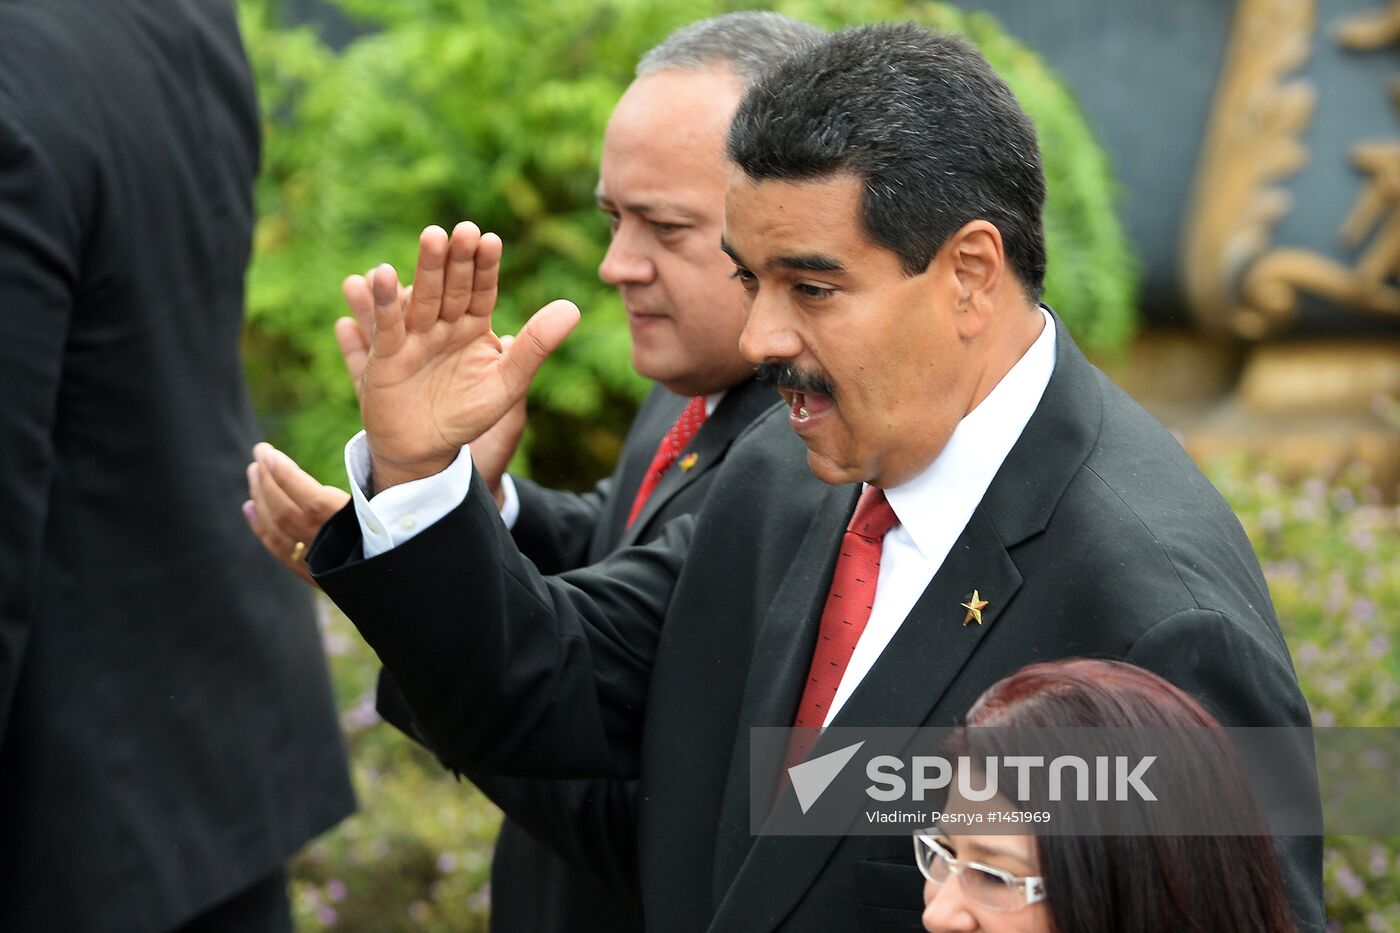 Nicolas Maduro sworn in as Venezuela's president